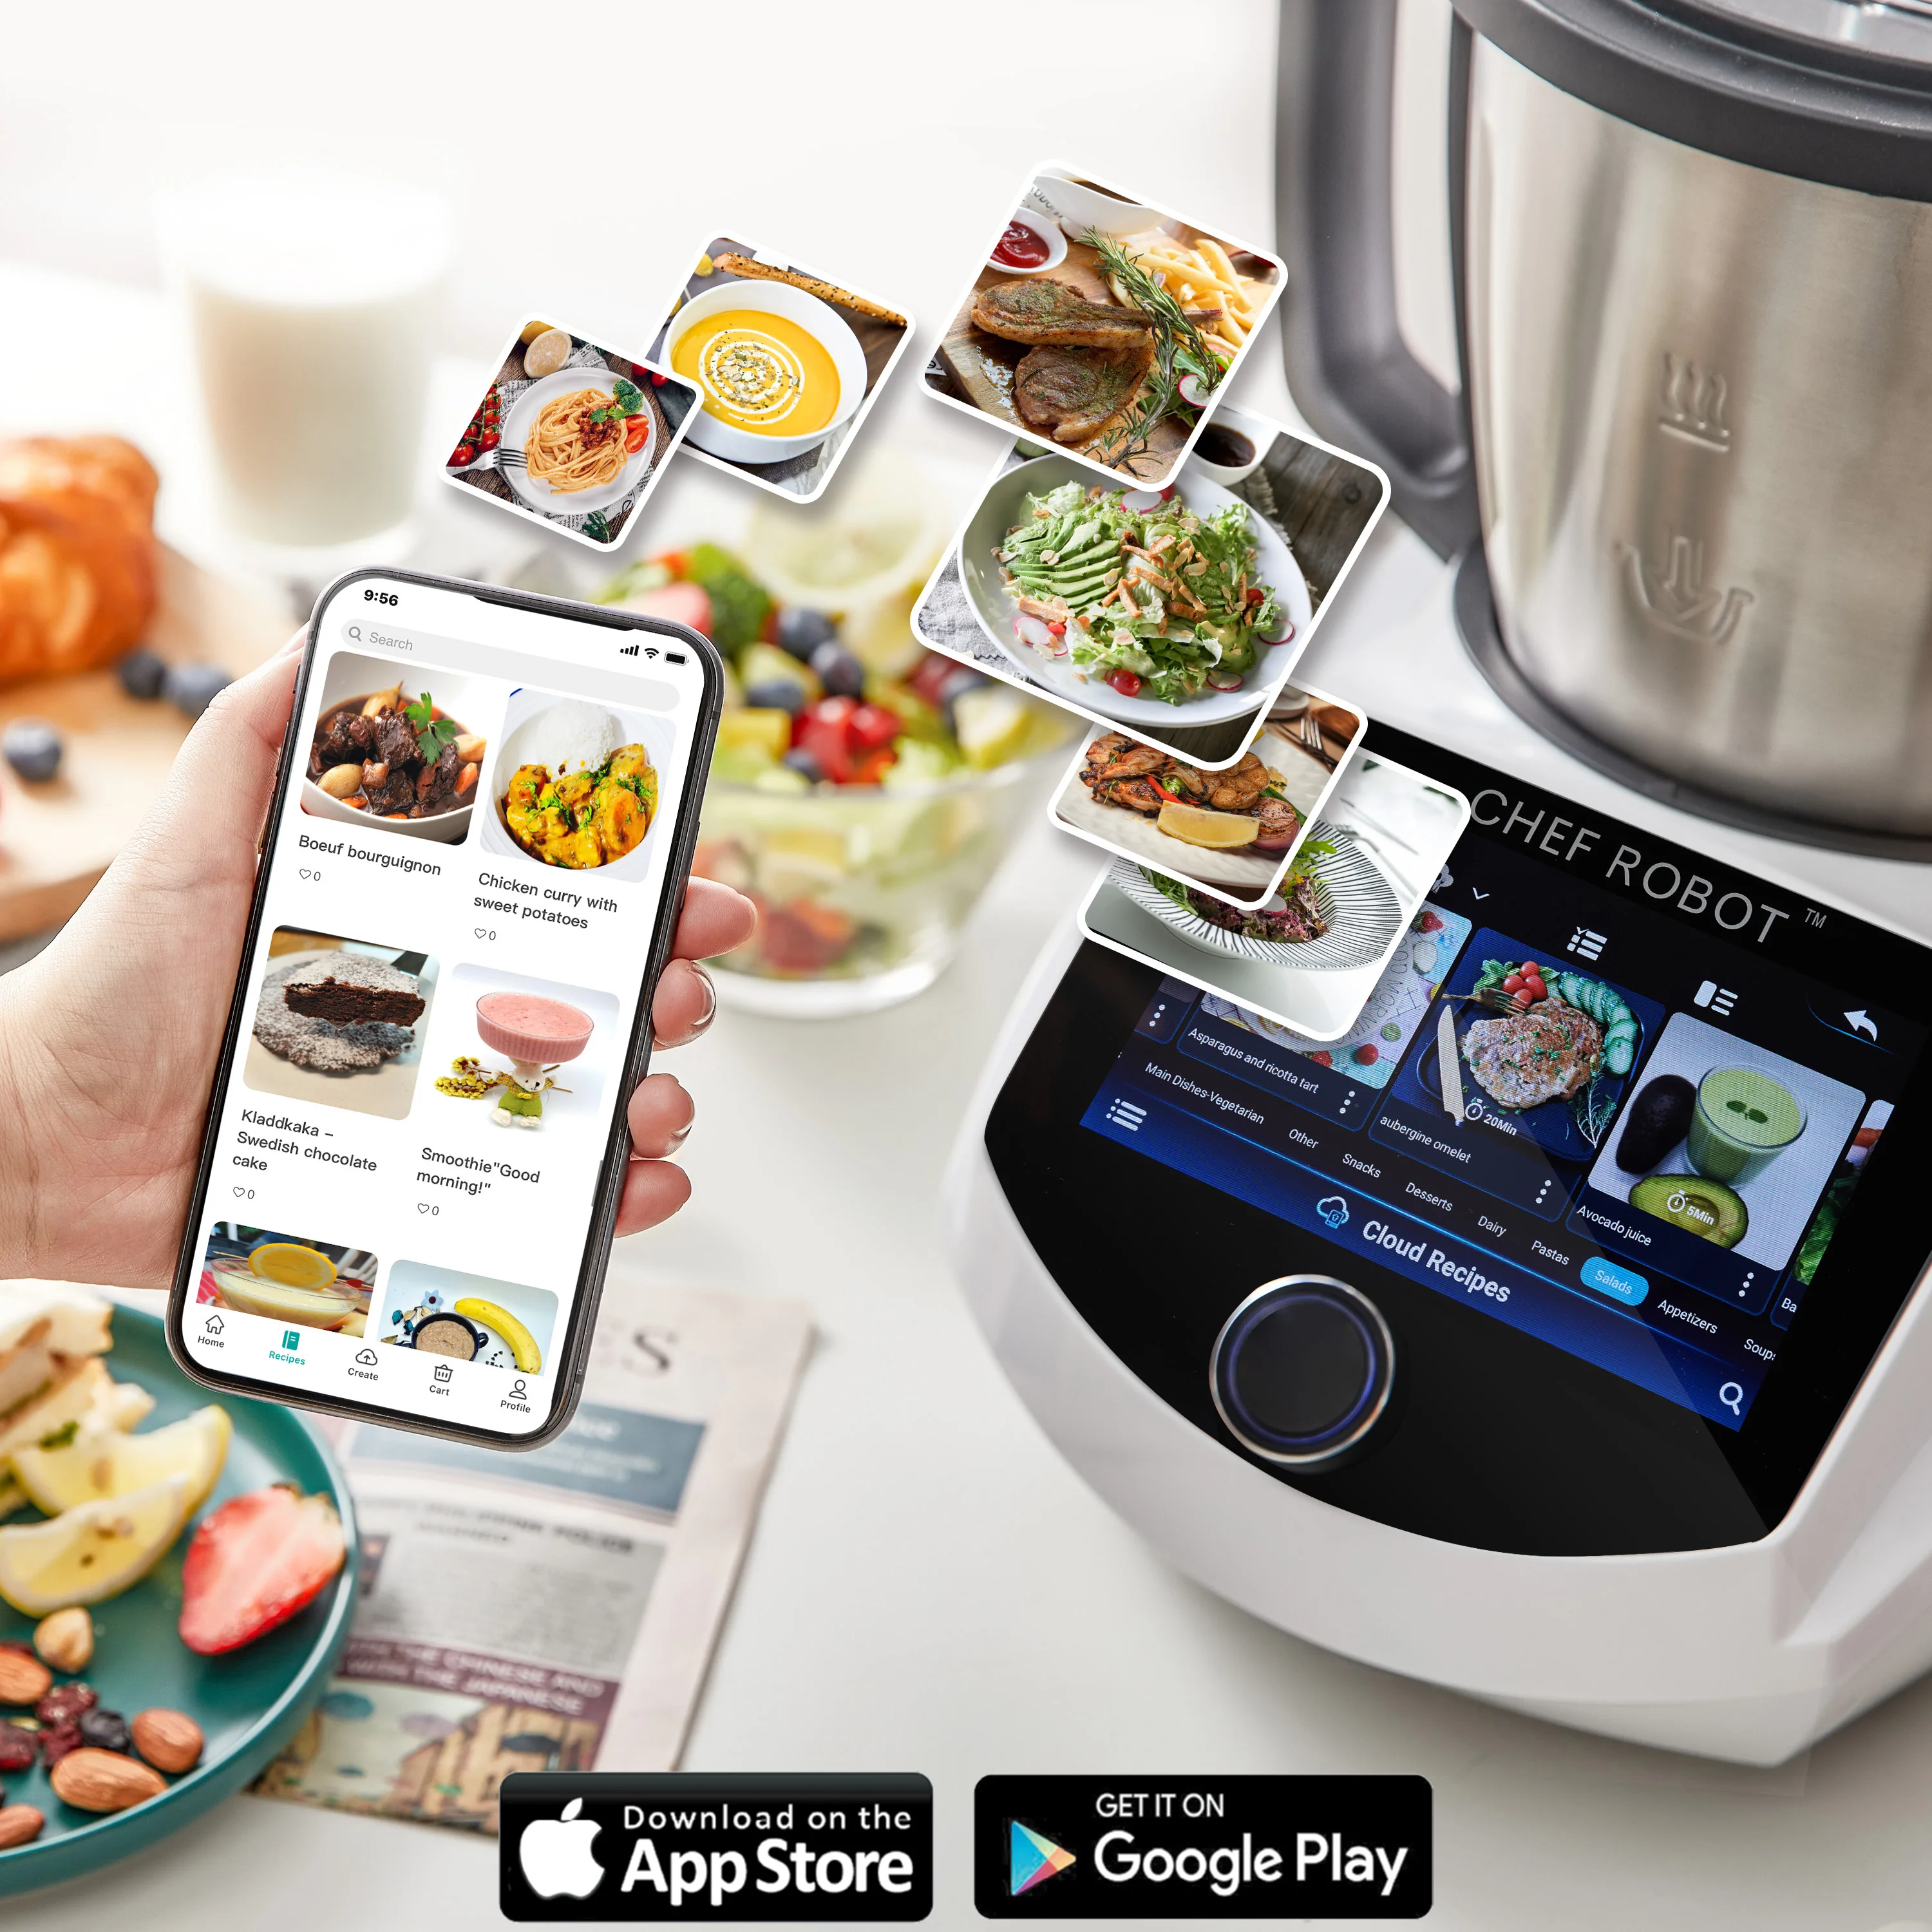  ChefRobot Robot procesador de alimentos de cocina, cocina  inteligente todo en uno, picadora, vapor, exprimidor, licuadora, hervir,  amasar, pesar, autolimpieza multifuncional con recetas guiadas, WiFi  integrado, control de aplicación (CR-5) 